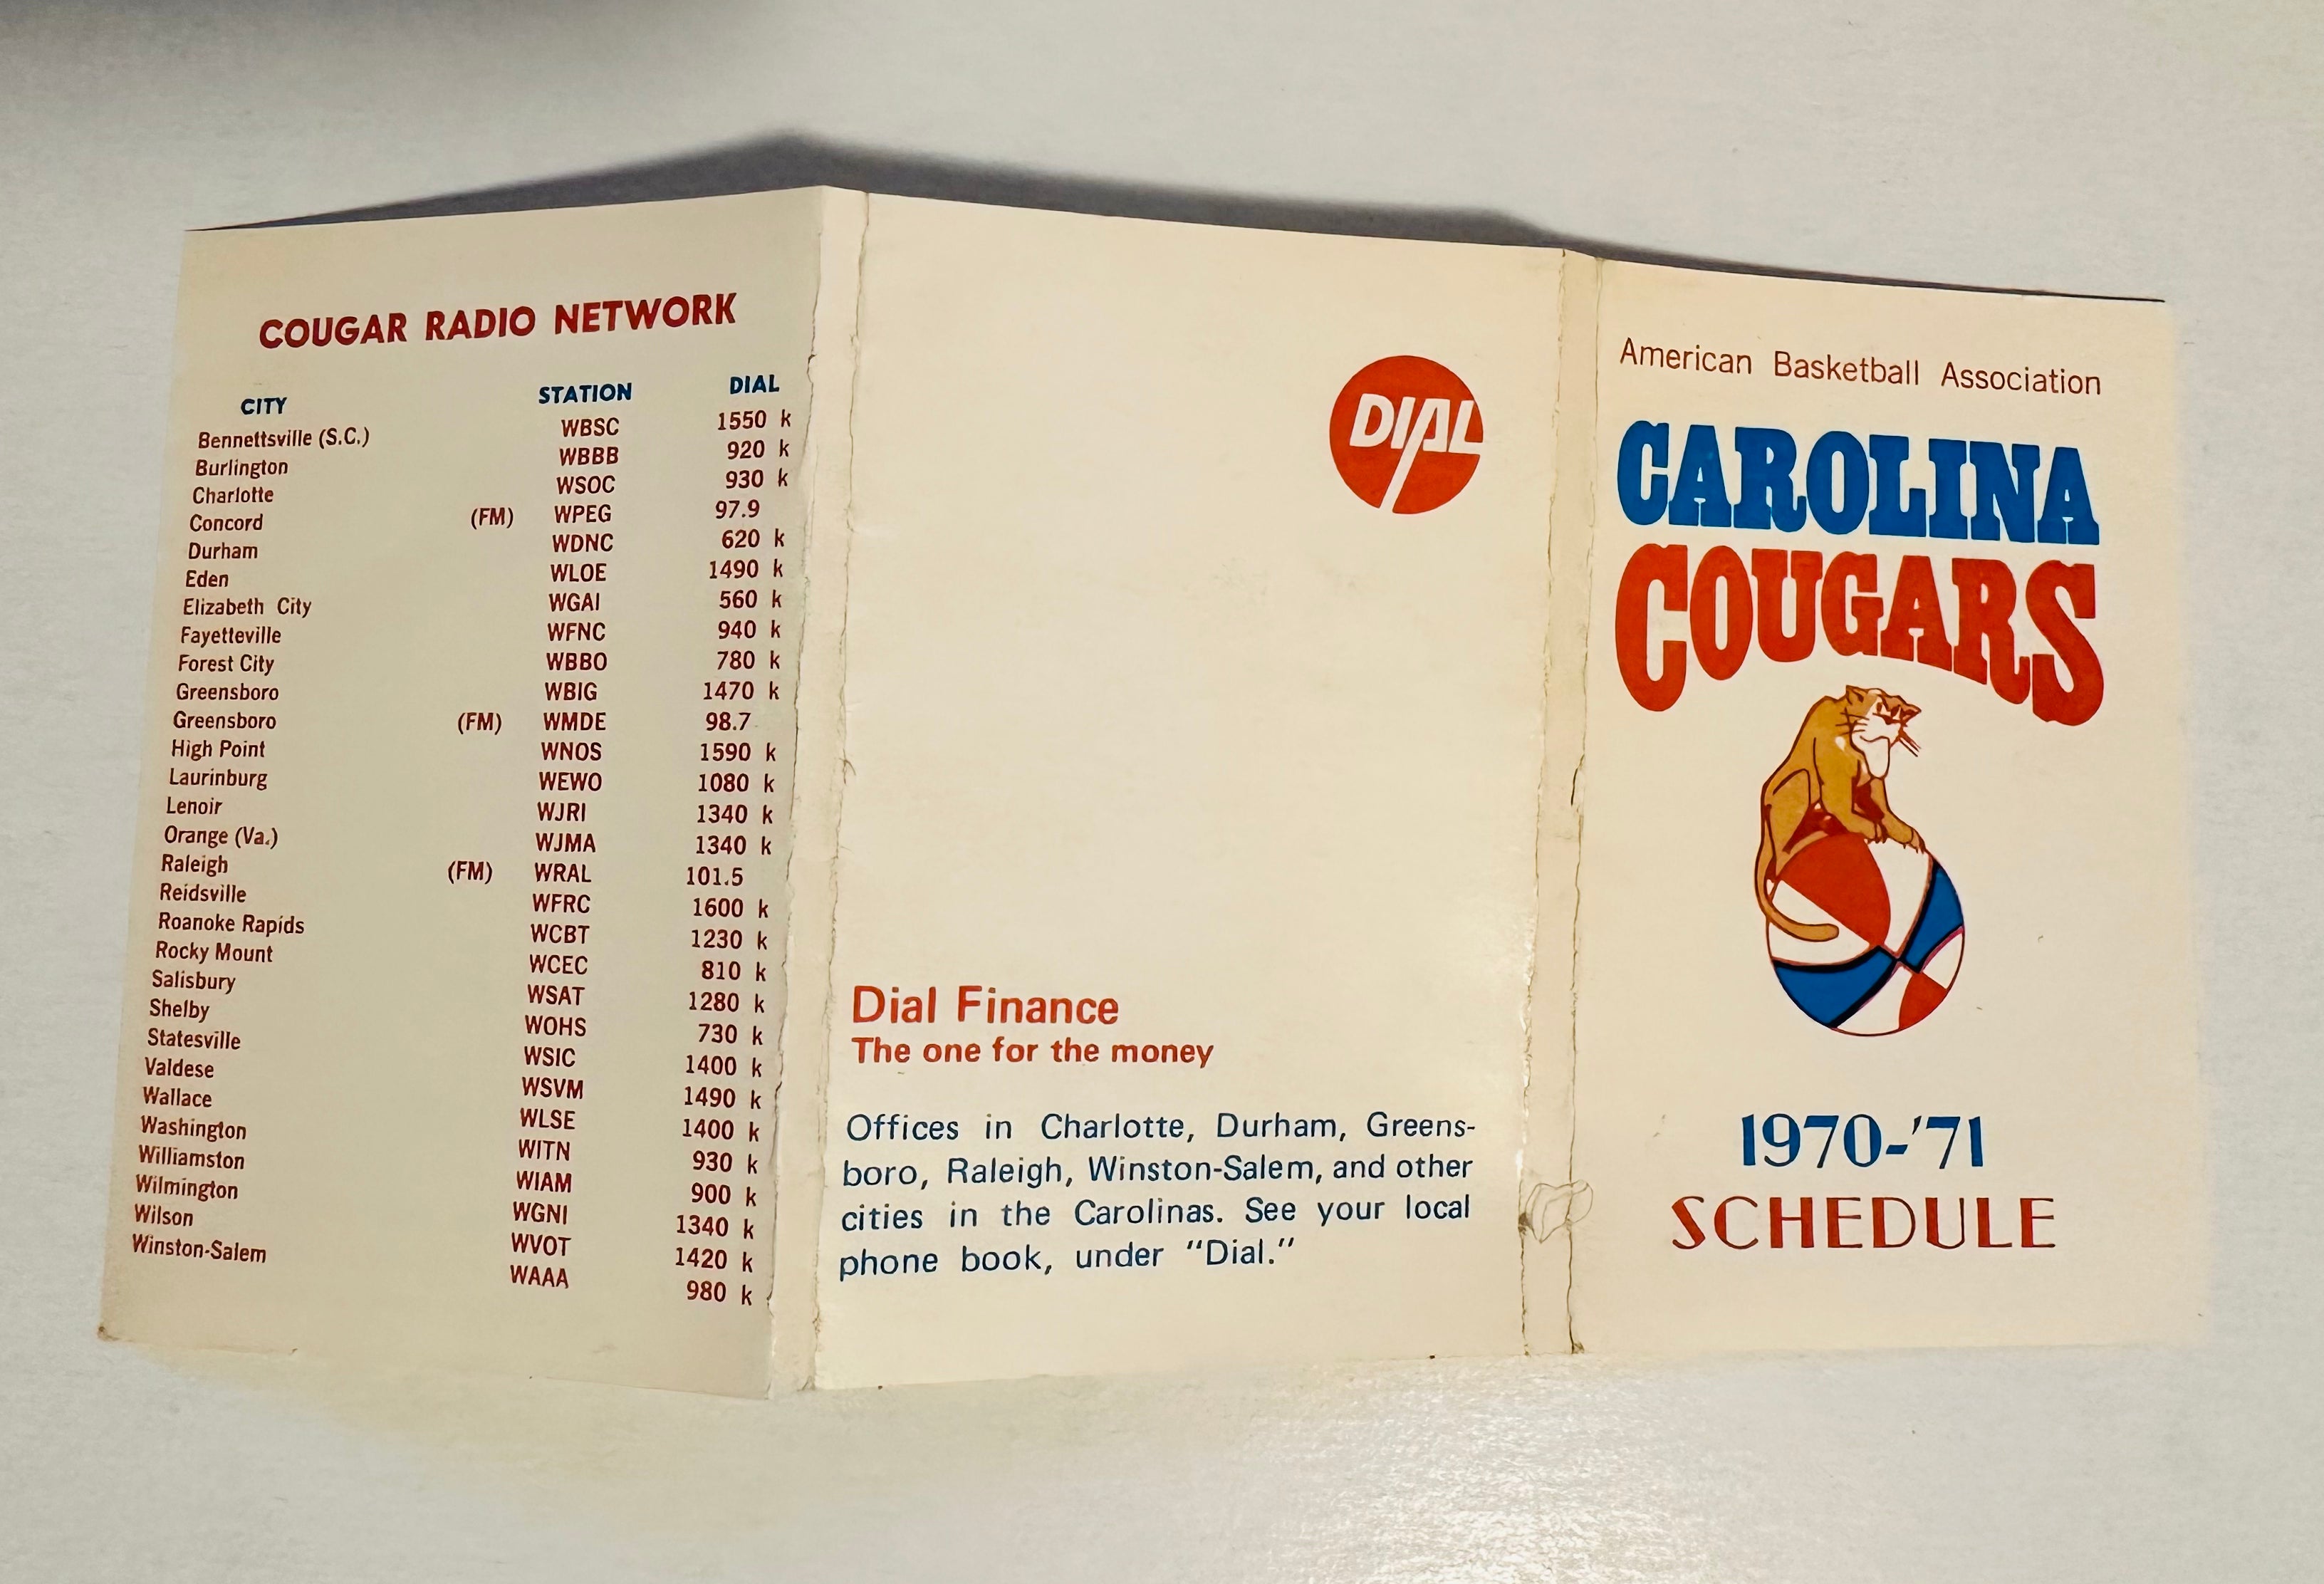 Carolina cougars, rare ABA basketball schedule 1970-71